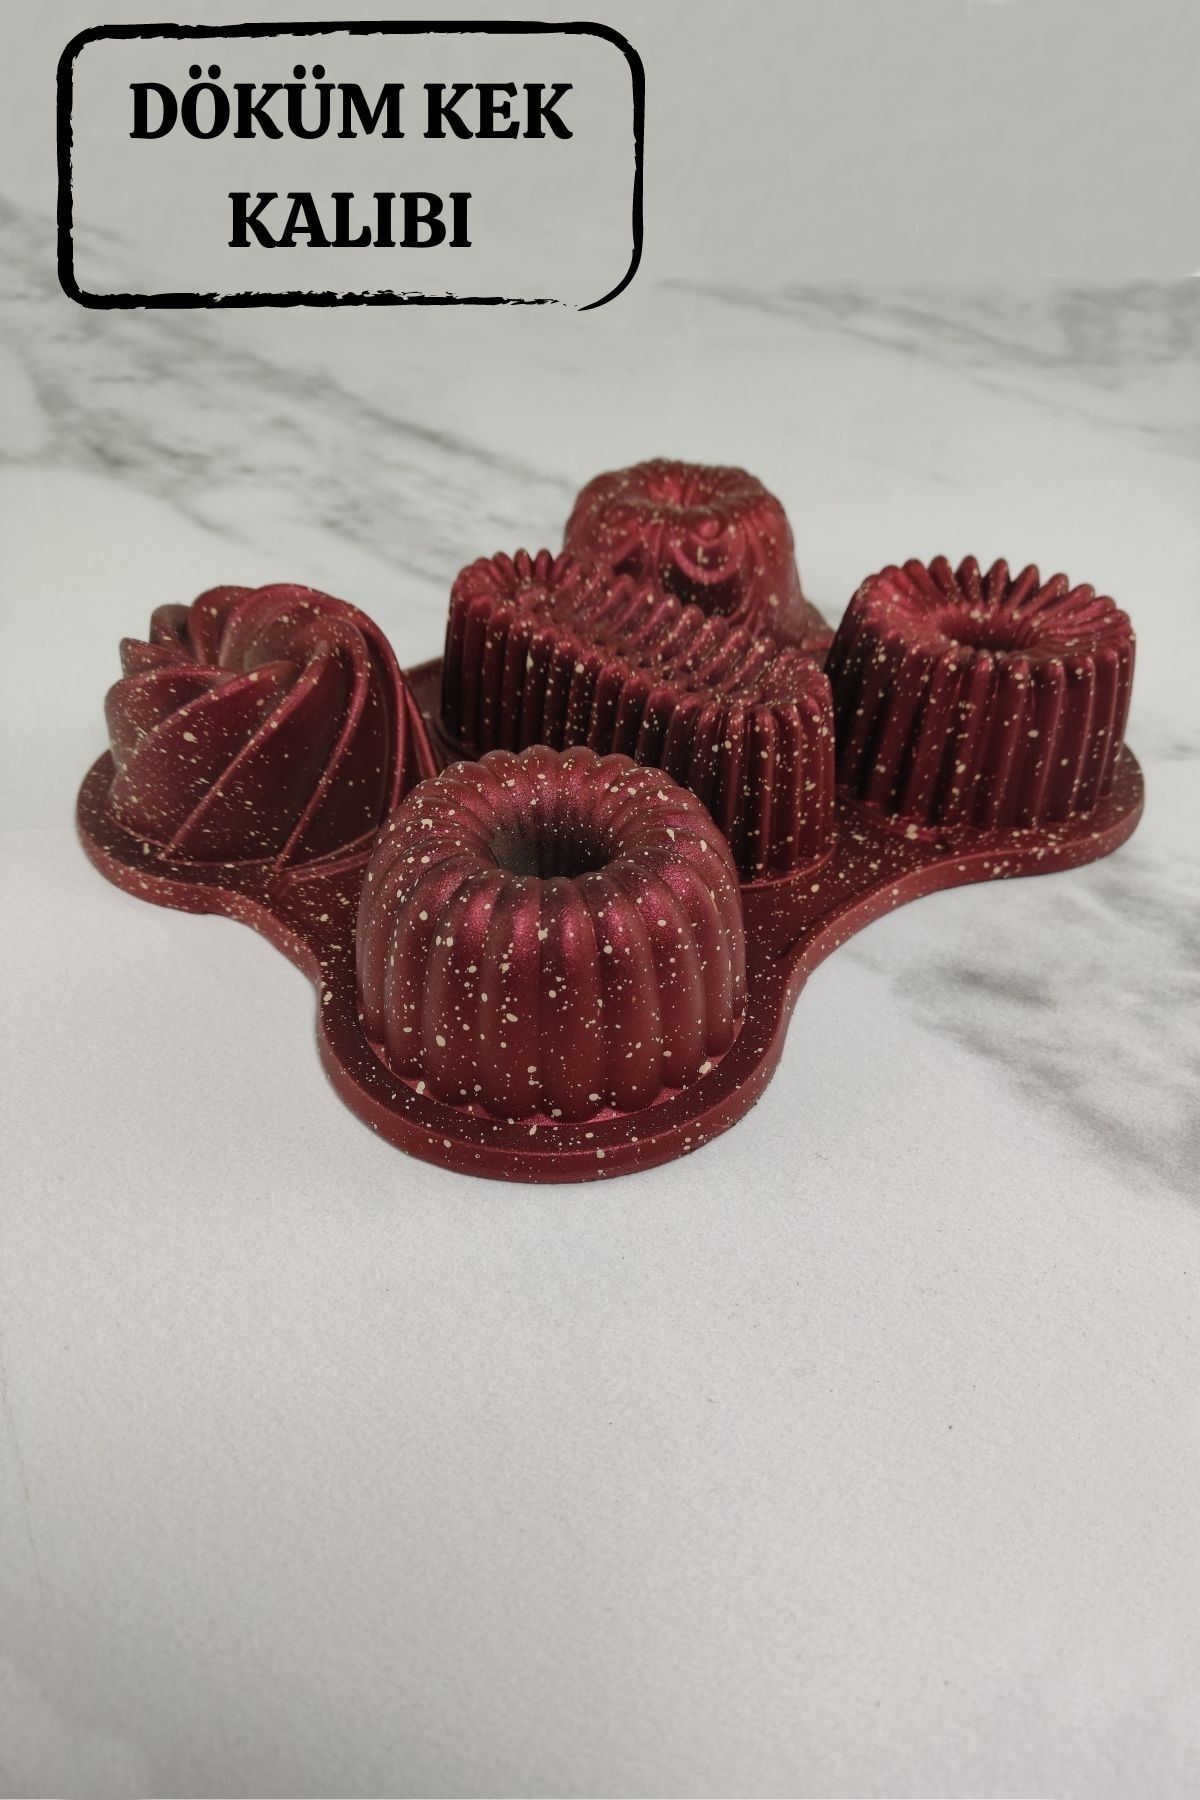 Digithome Döküm 5’li Muffin Kek Kalıbı Kırmızı - Mnb05417 C1-1-154